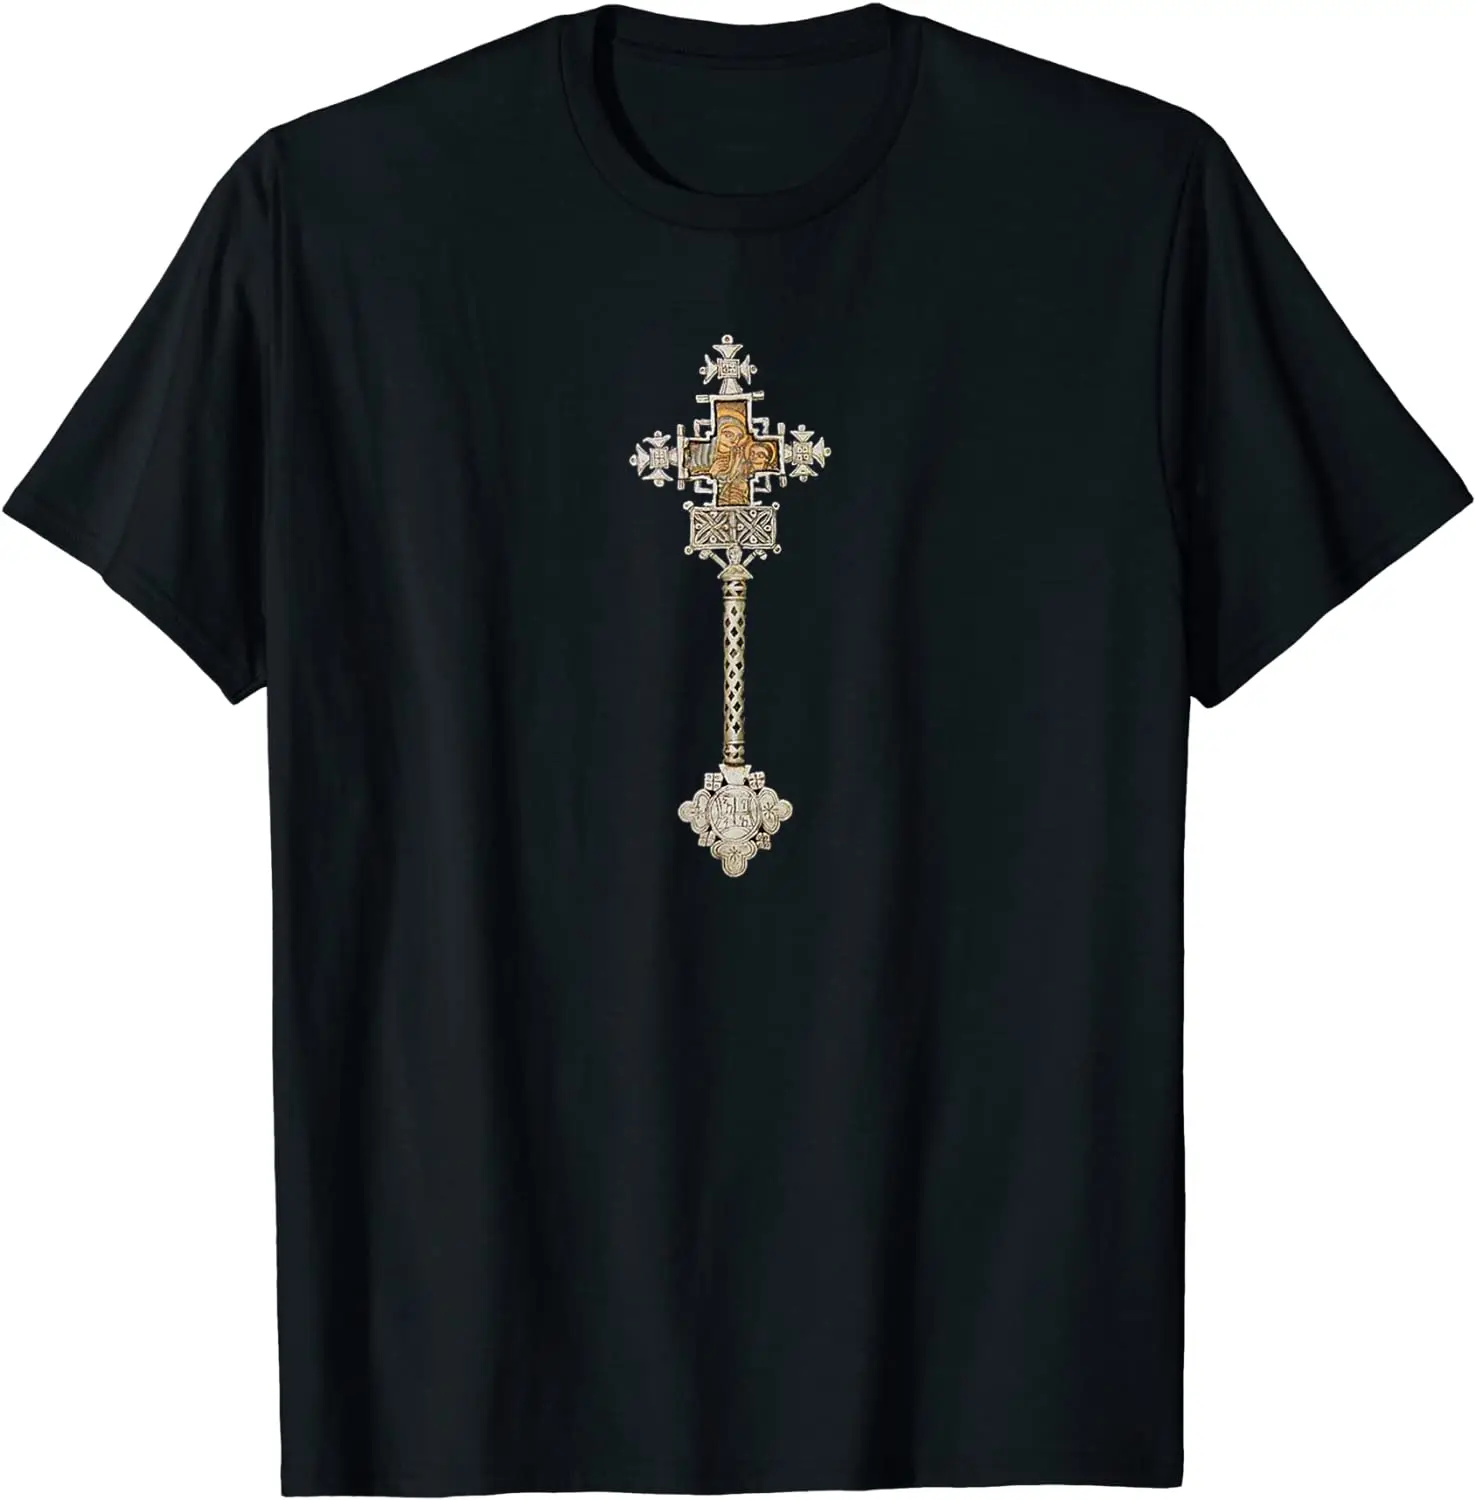 

Ethiopian Cross Christian Art Christ In Glory Men T-Shirt Short Sleeve Casual 100% Cotton O-Neck Summer Tees